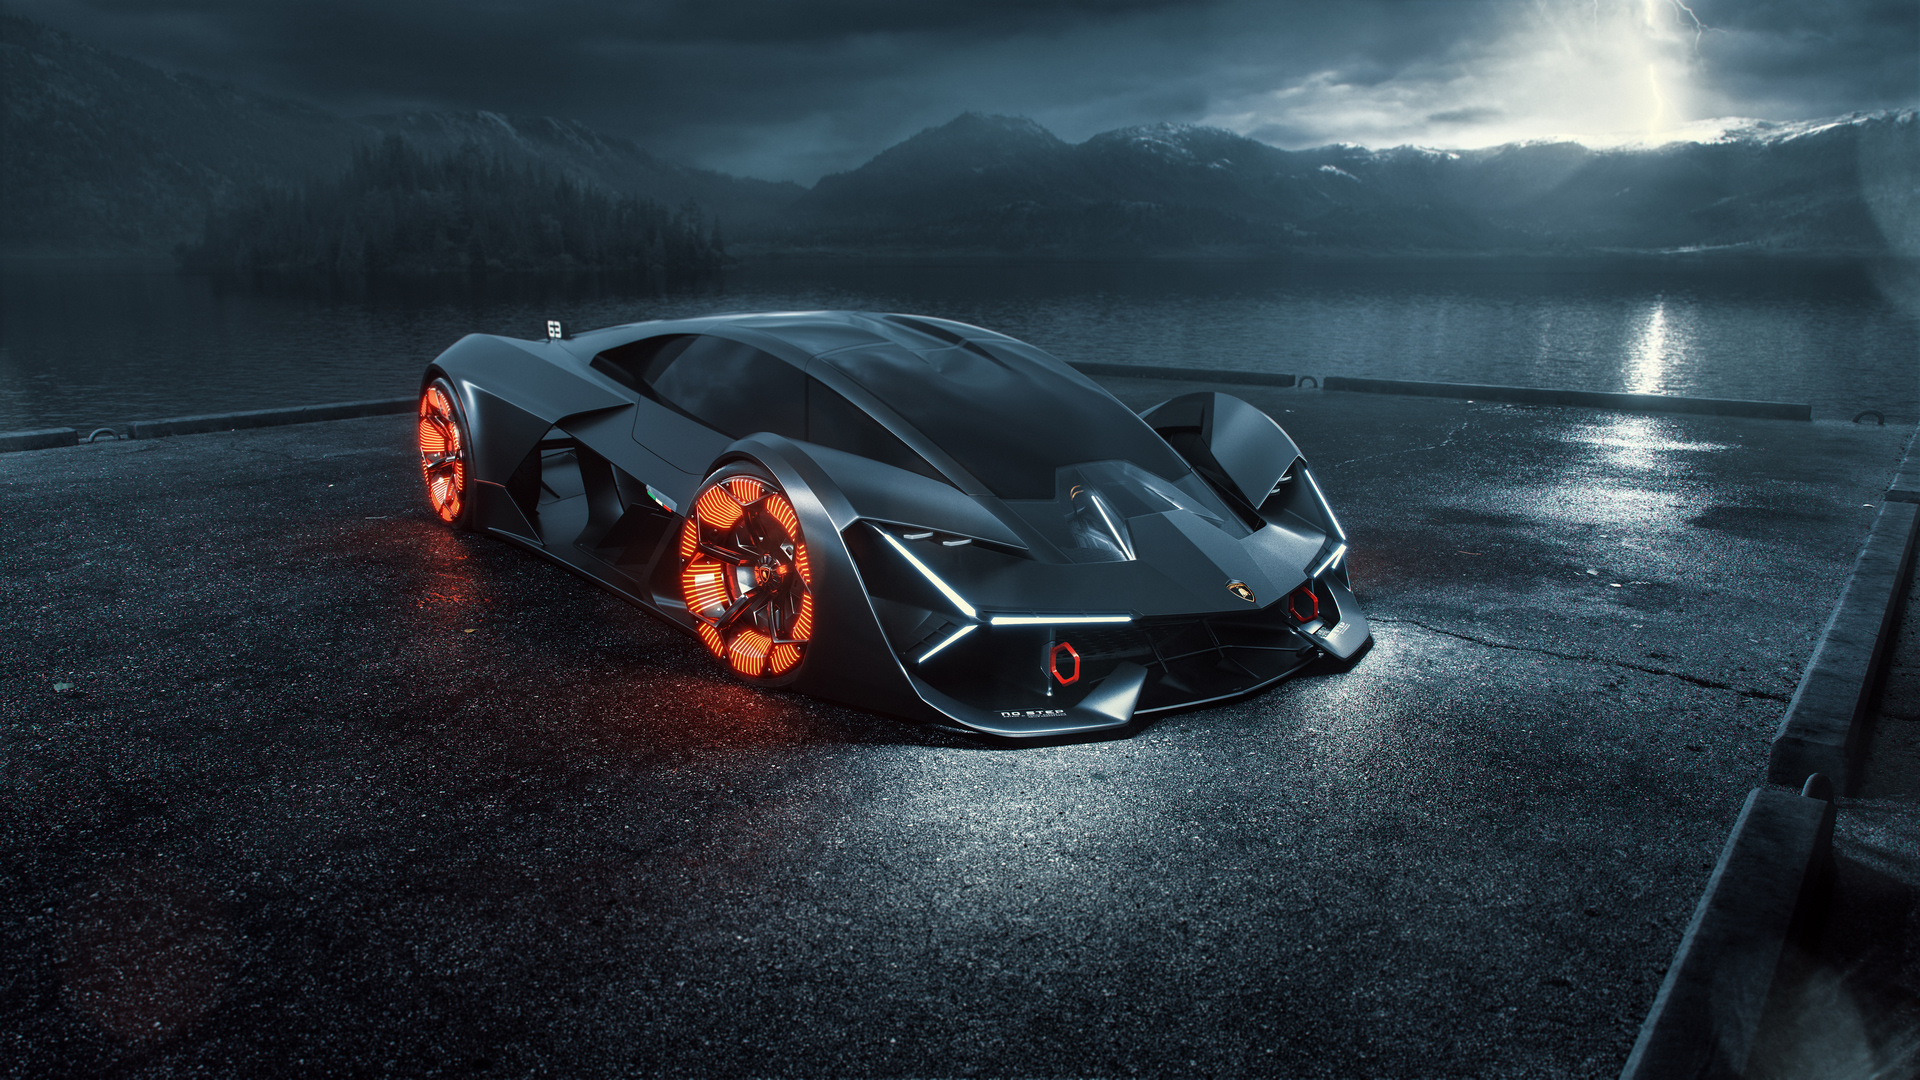 2019 Lamborghini Terzo Millennio Digital Art, HD Cars, 4k ...